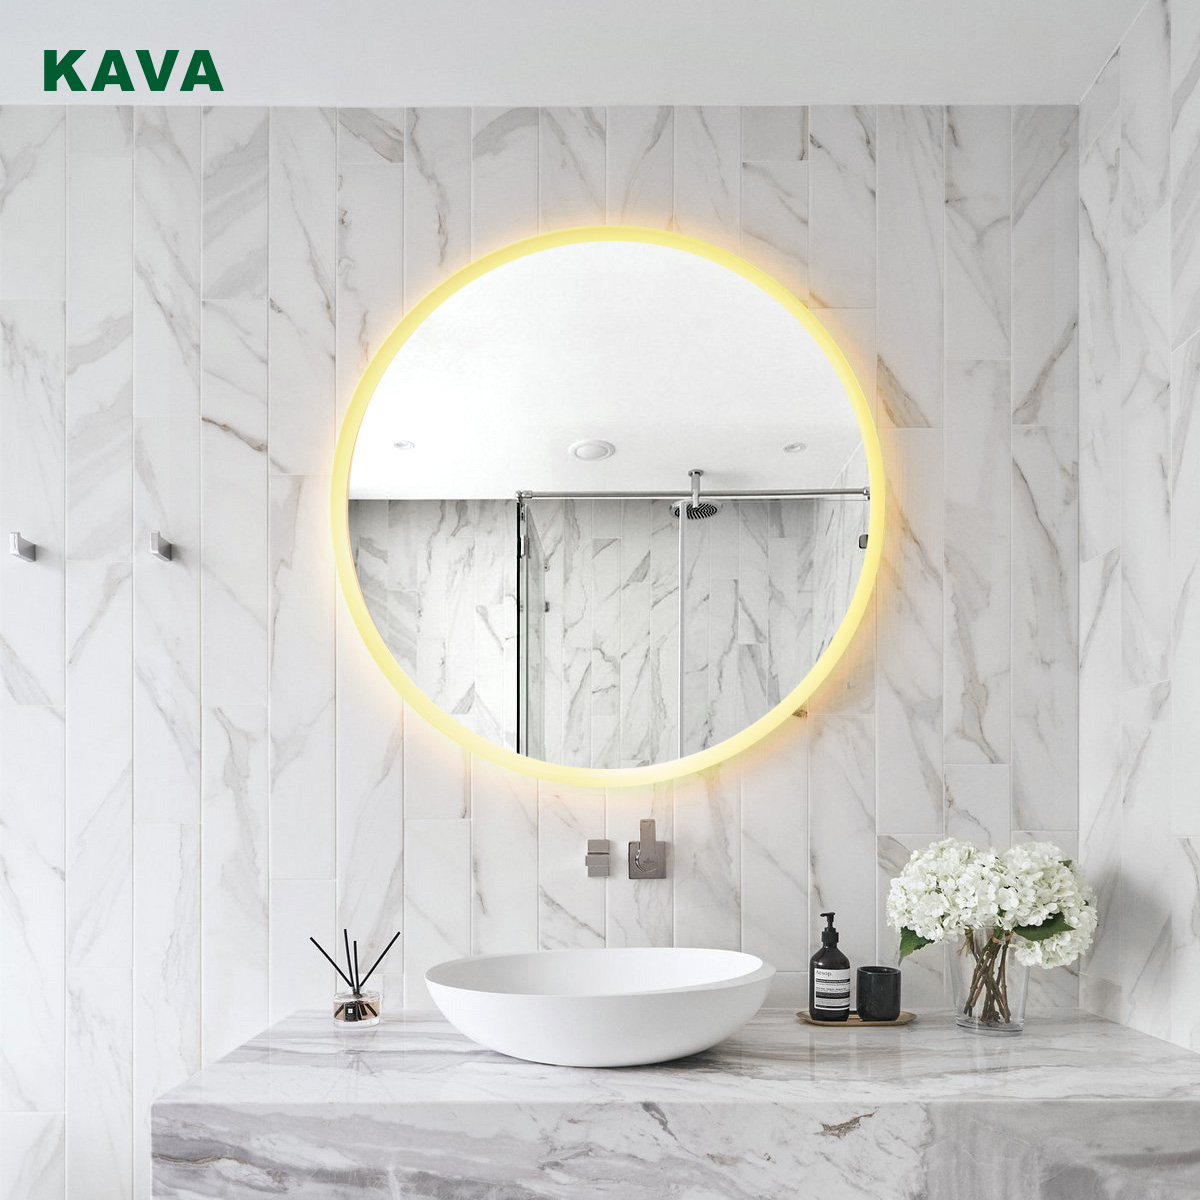 Hot sale Wall Lights For Living Room - Round mirror light Waterproof Bathroom Led Vanity Lights KMV6008M – KAVA